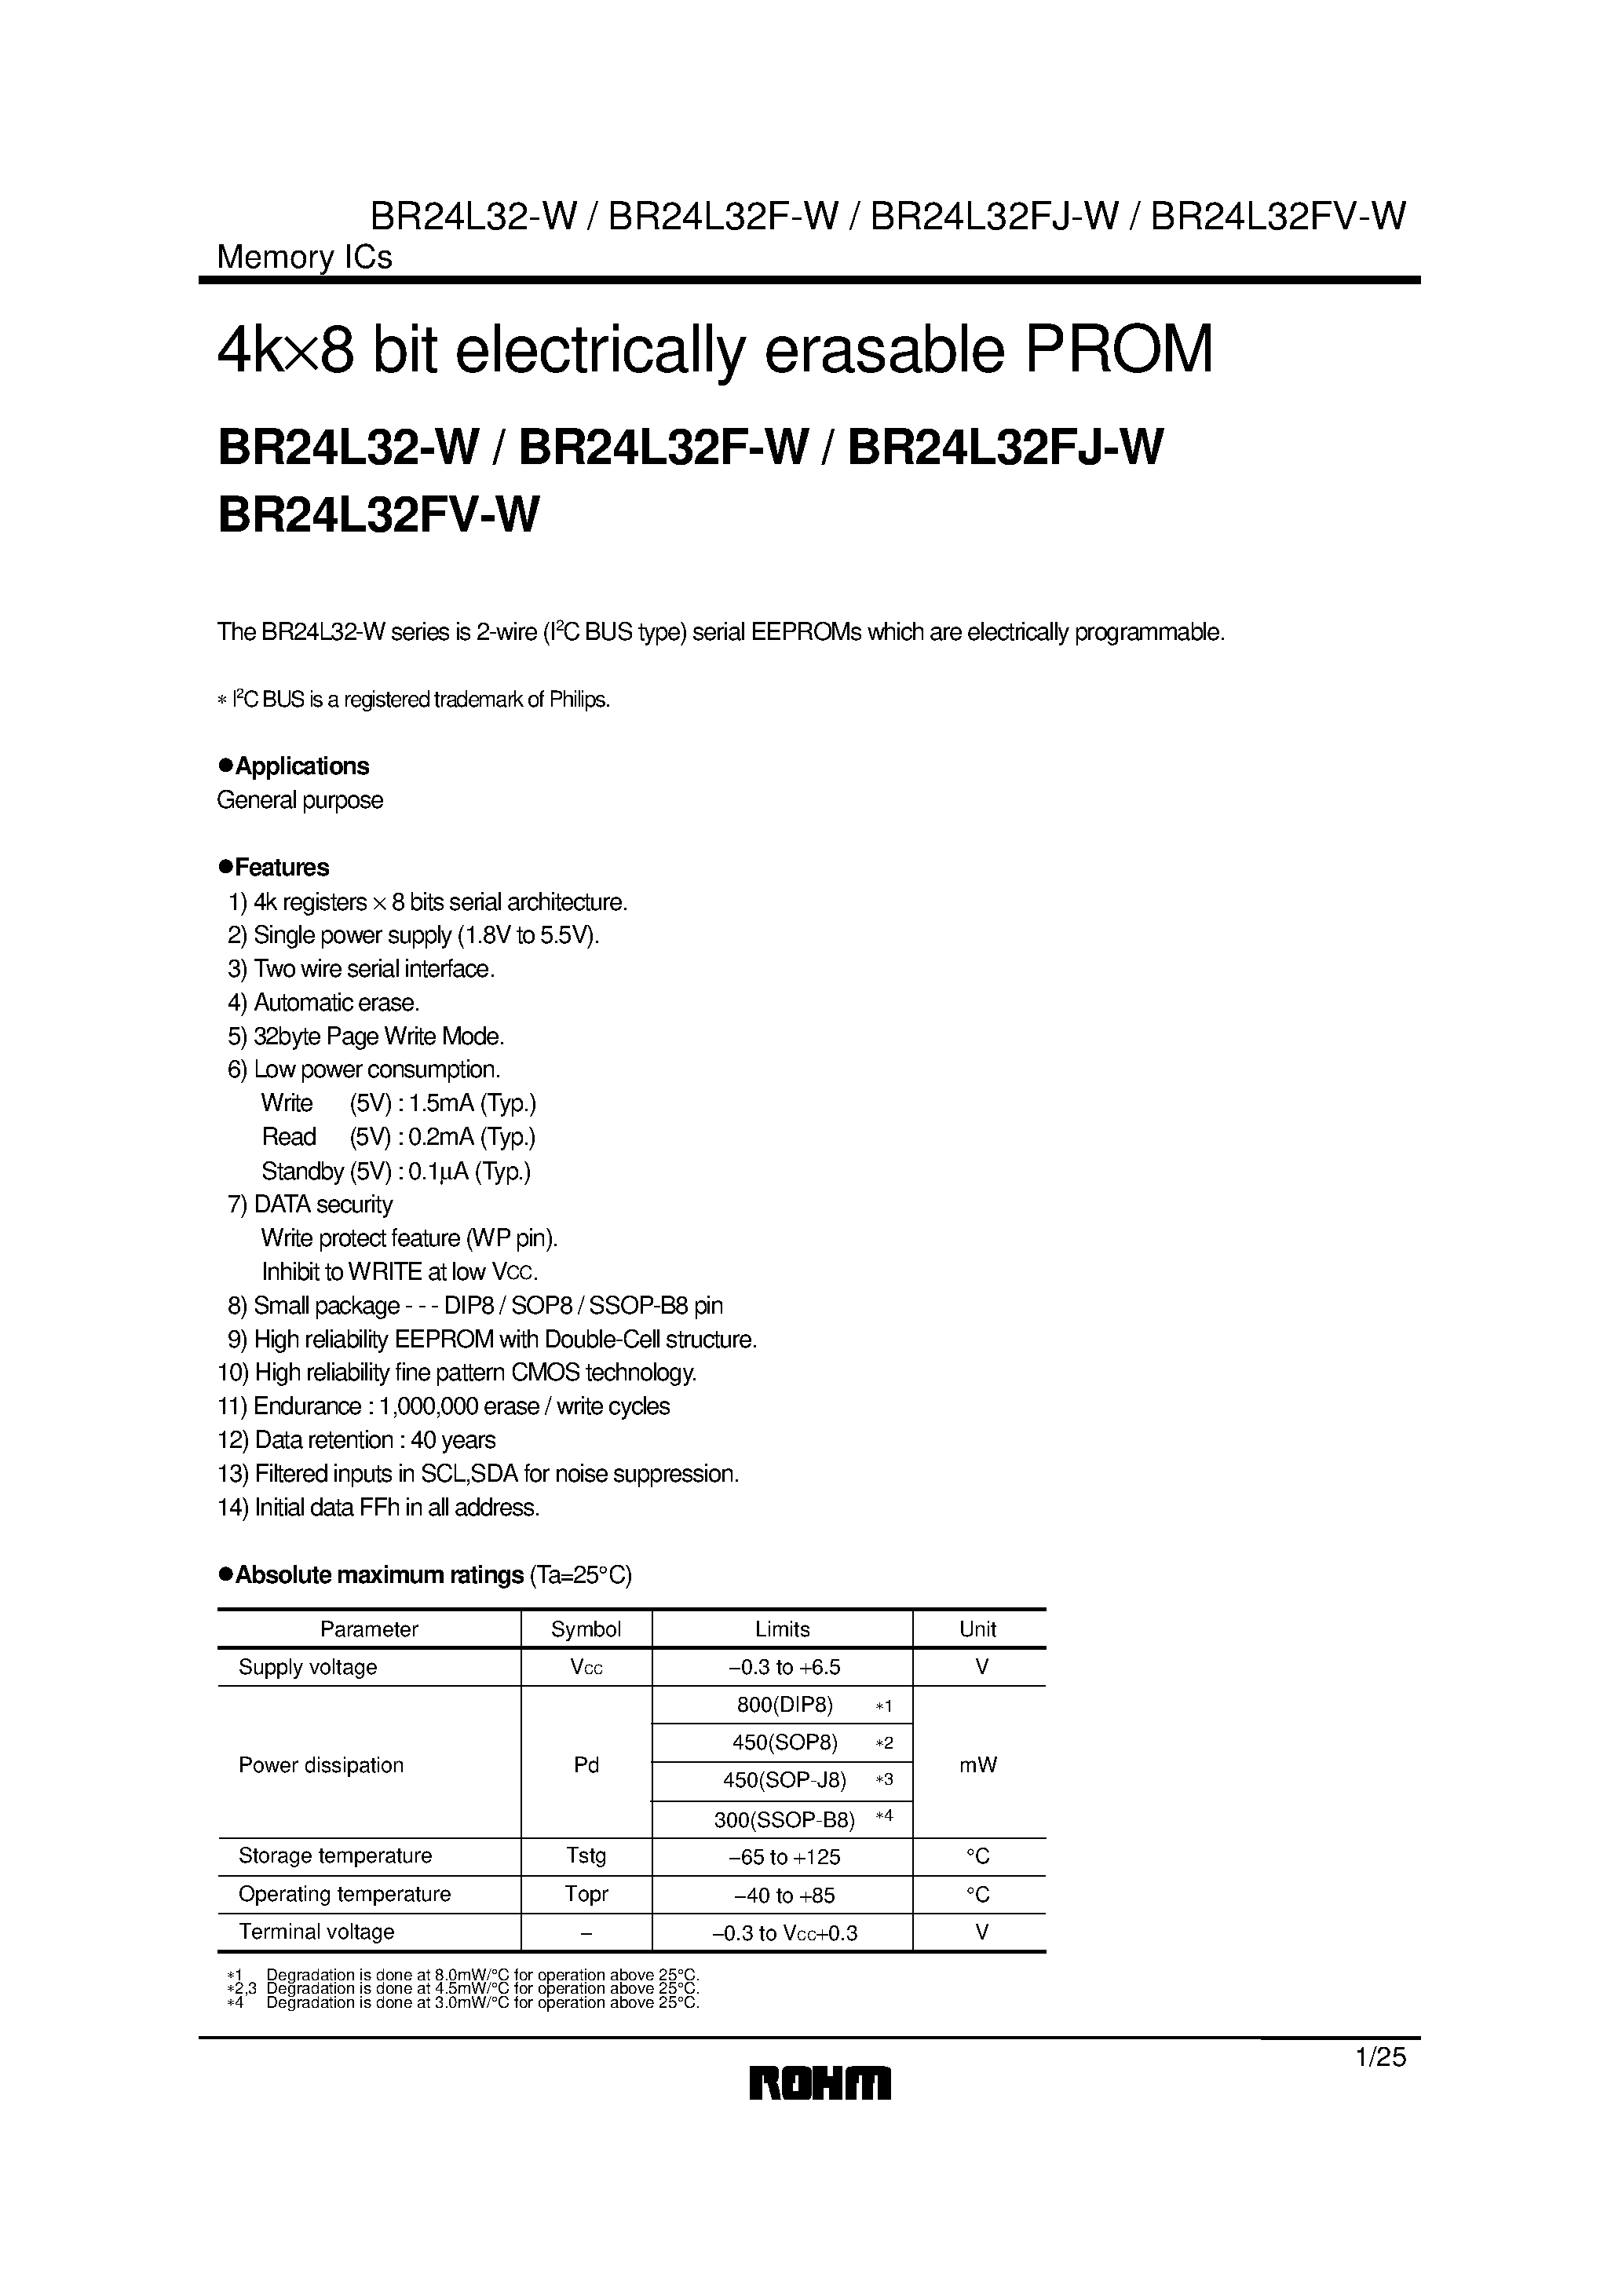 Datasheet BR24L32FV-W - 4k8 bit electrically erasable PROM page 1